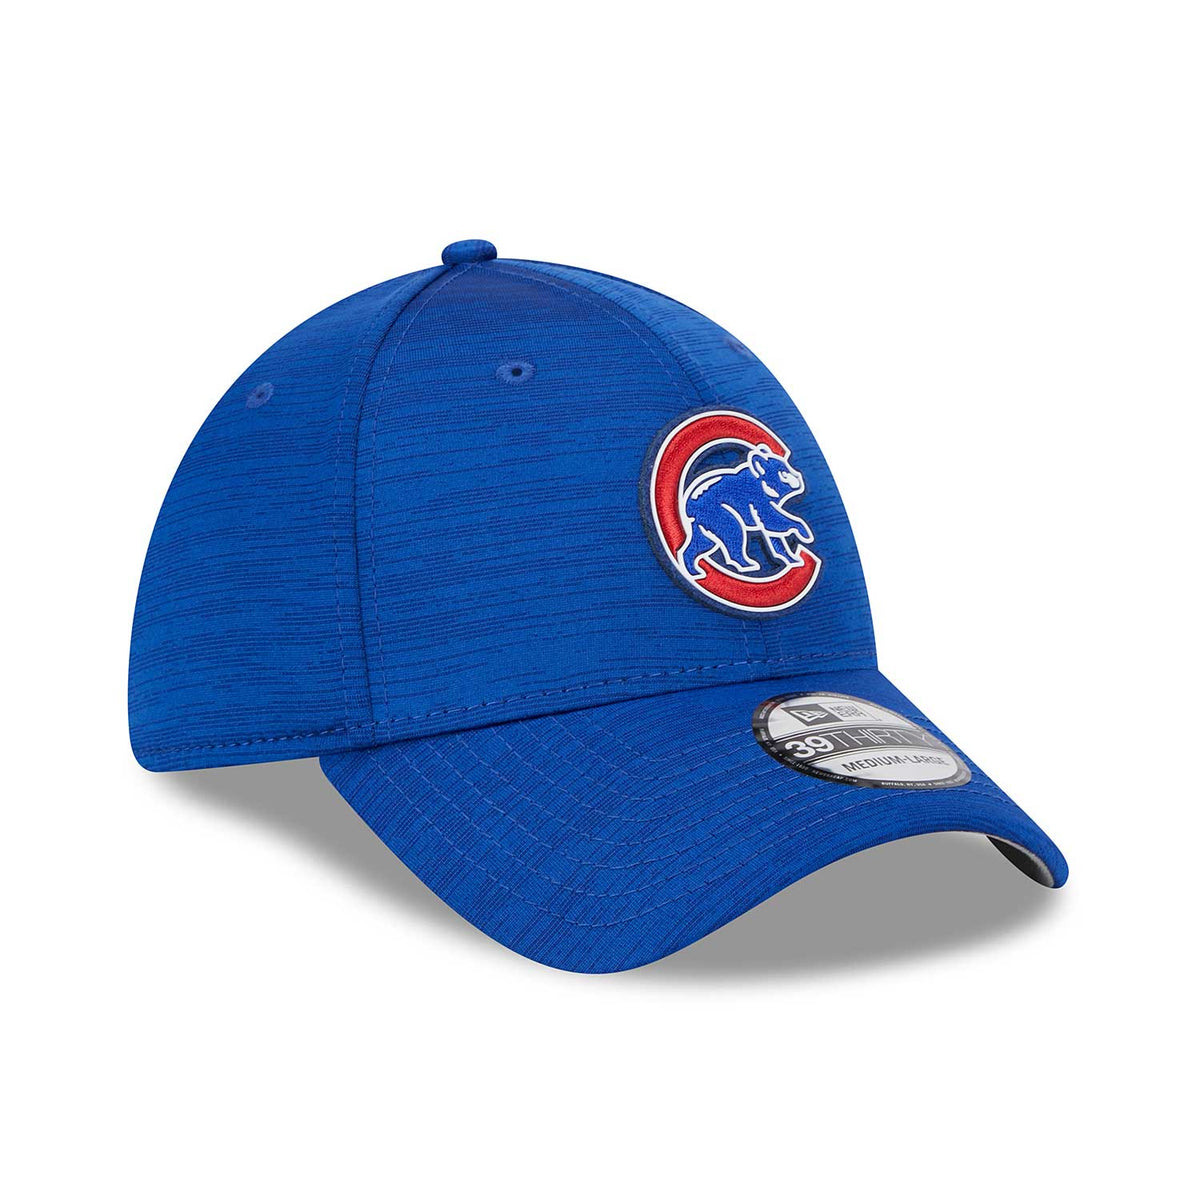 Men's Fanatics Branded Royal Chicago Cubs Cooperstown Core Flex Hat